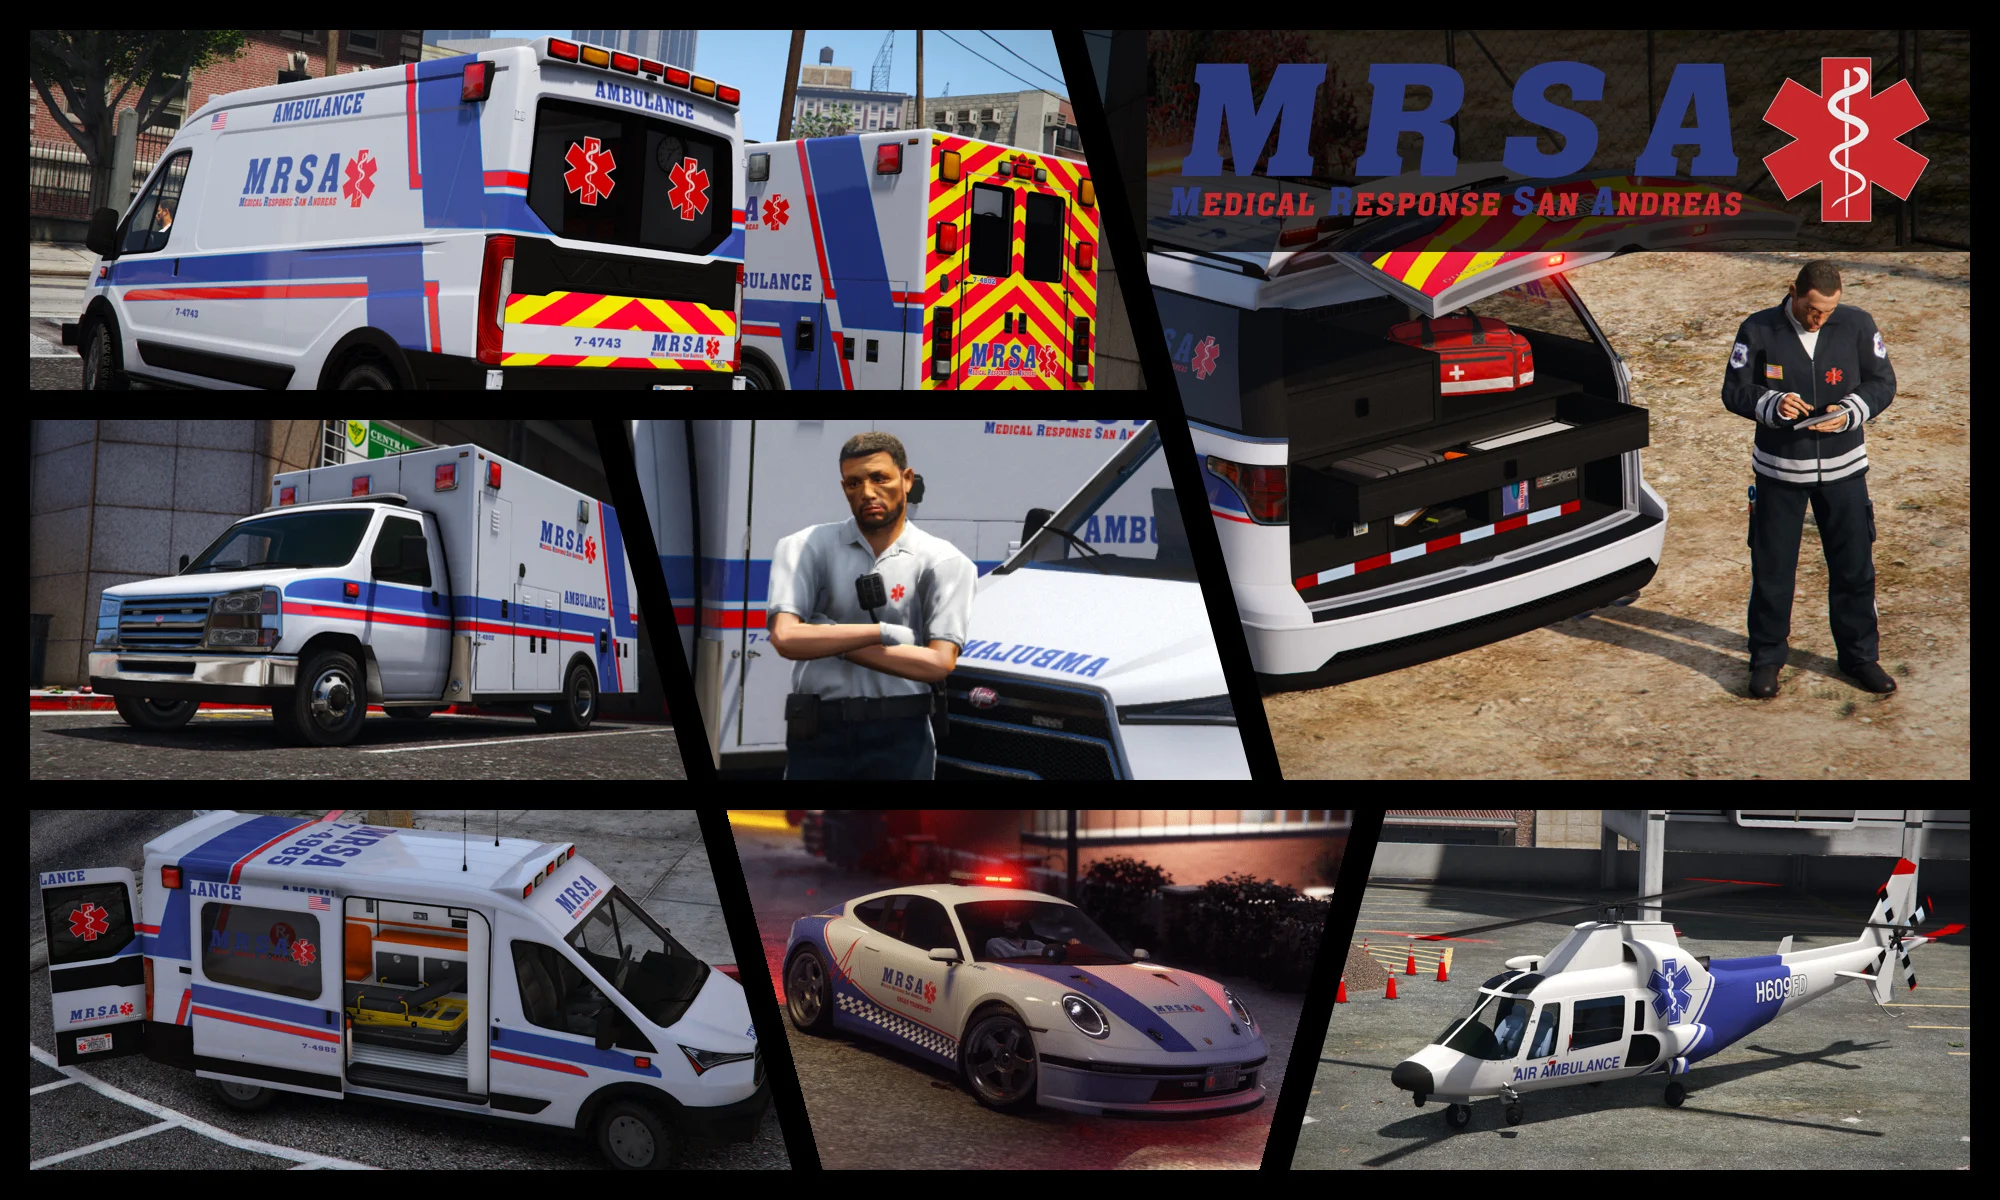 Medical Response San Andreas (MRSA) Pack V1.1 – GTA 5 mod